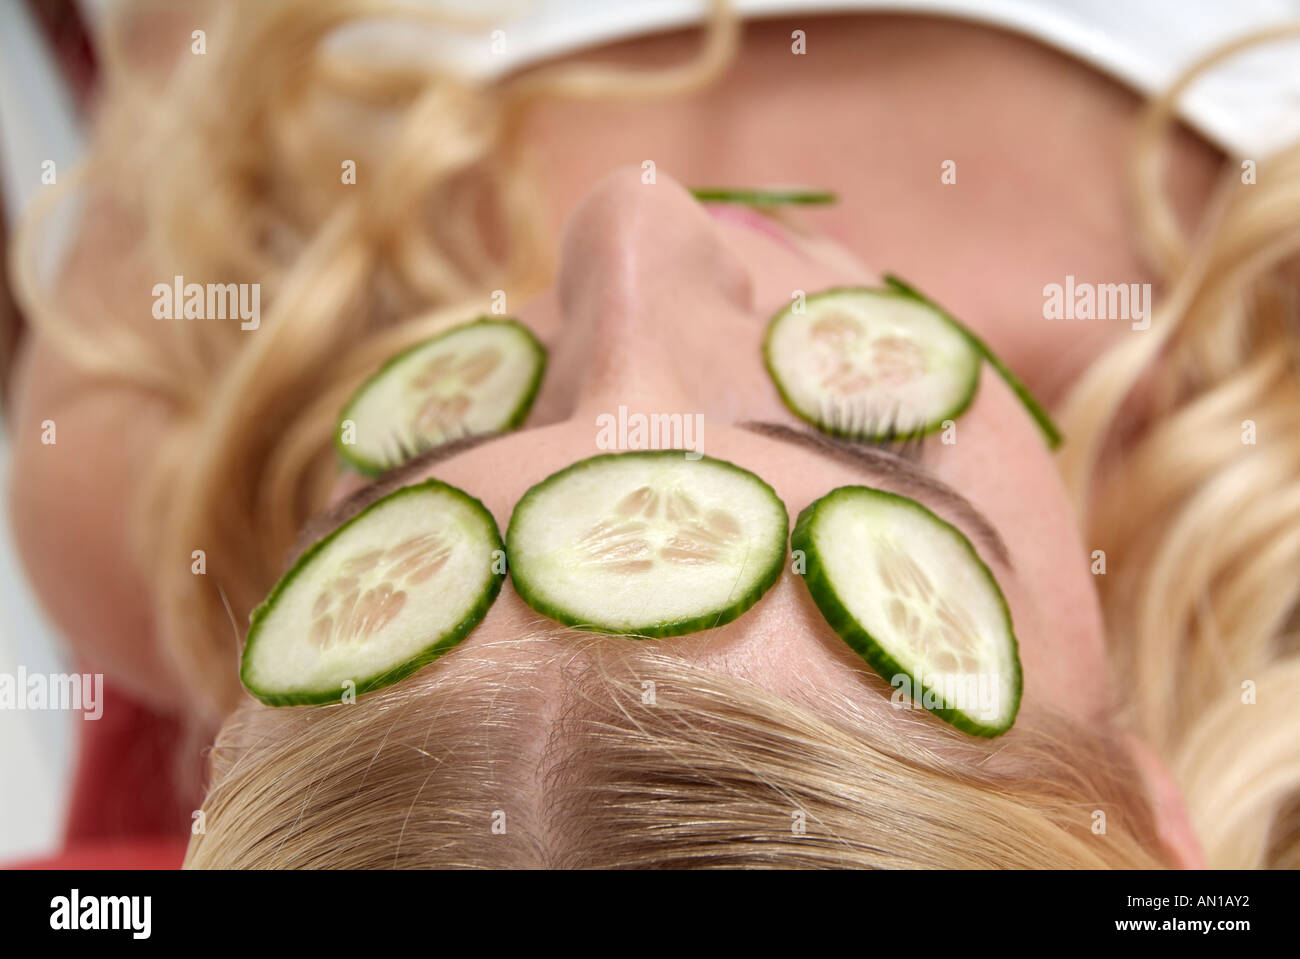 Beauty woman Lifestyle cucumber bodycare, face, blonde woman adults skincare Stock Photo